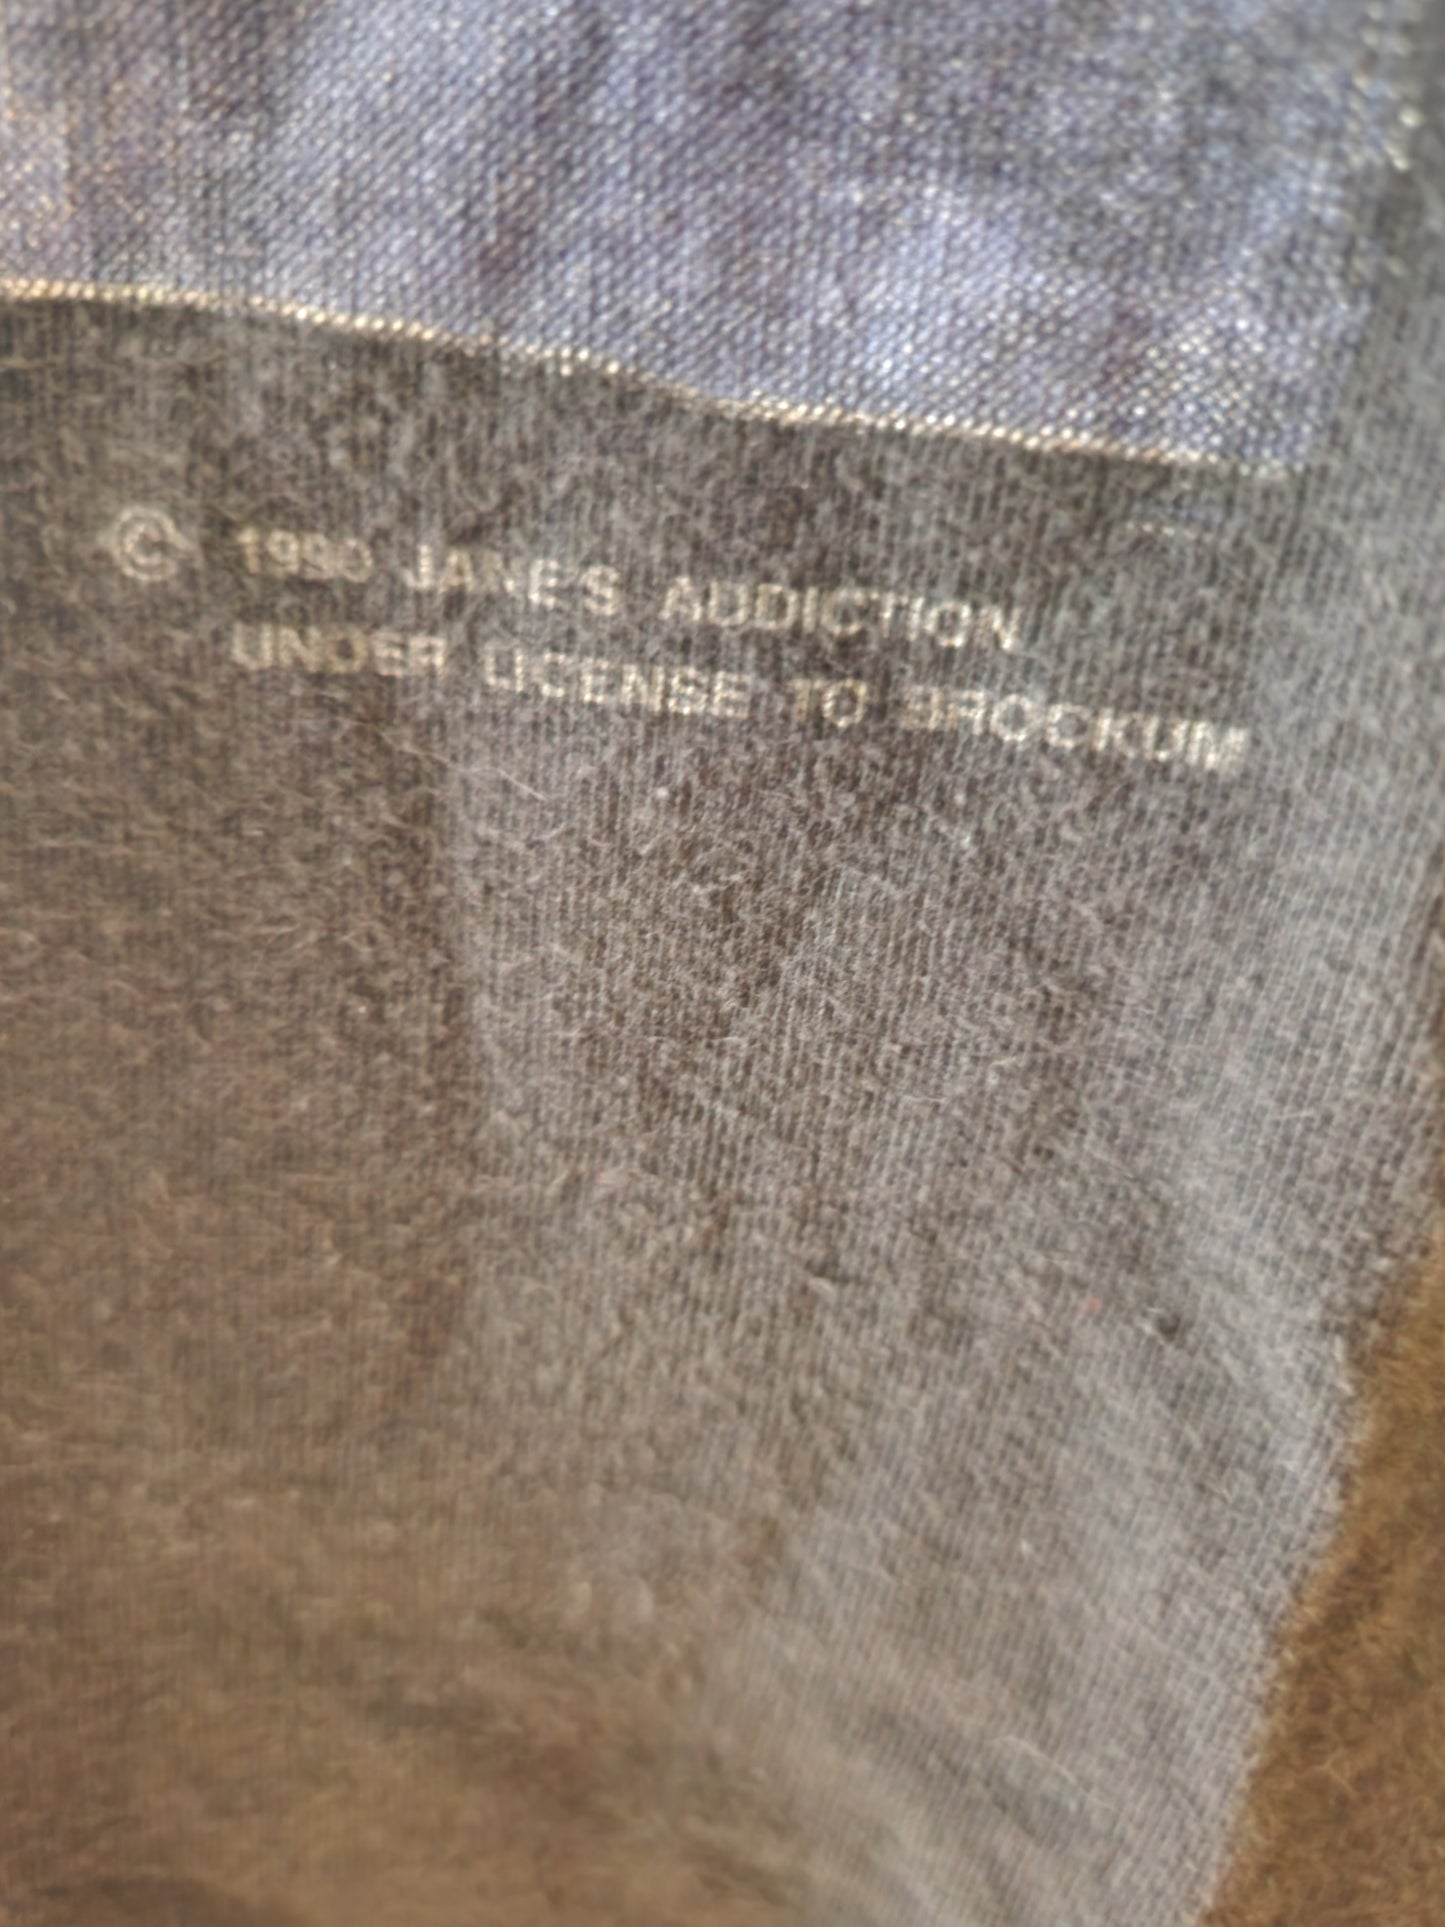 Vintage Jane's Addiction Article 1 T Shirt by Brockum